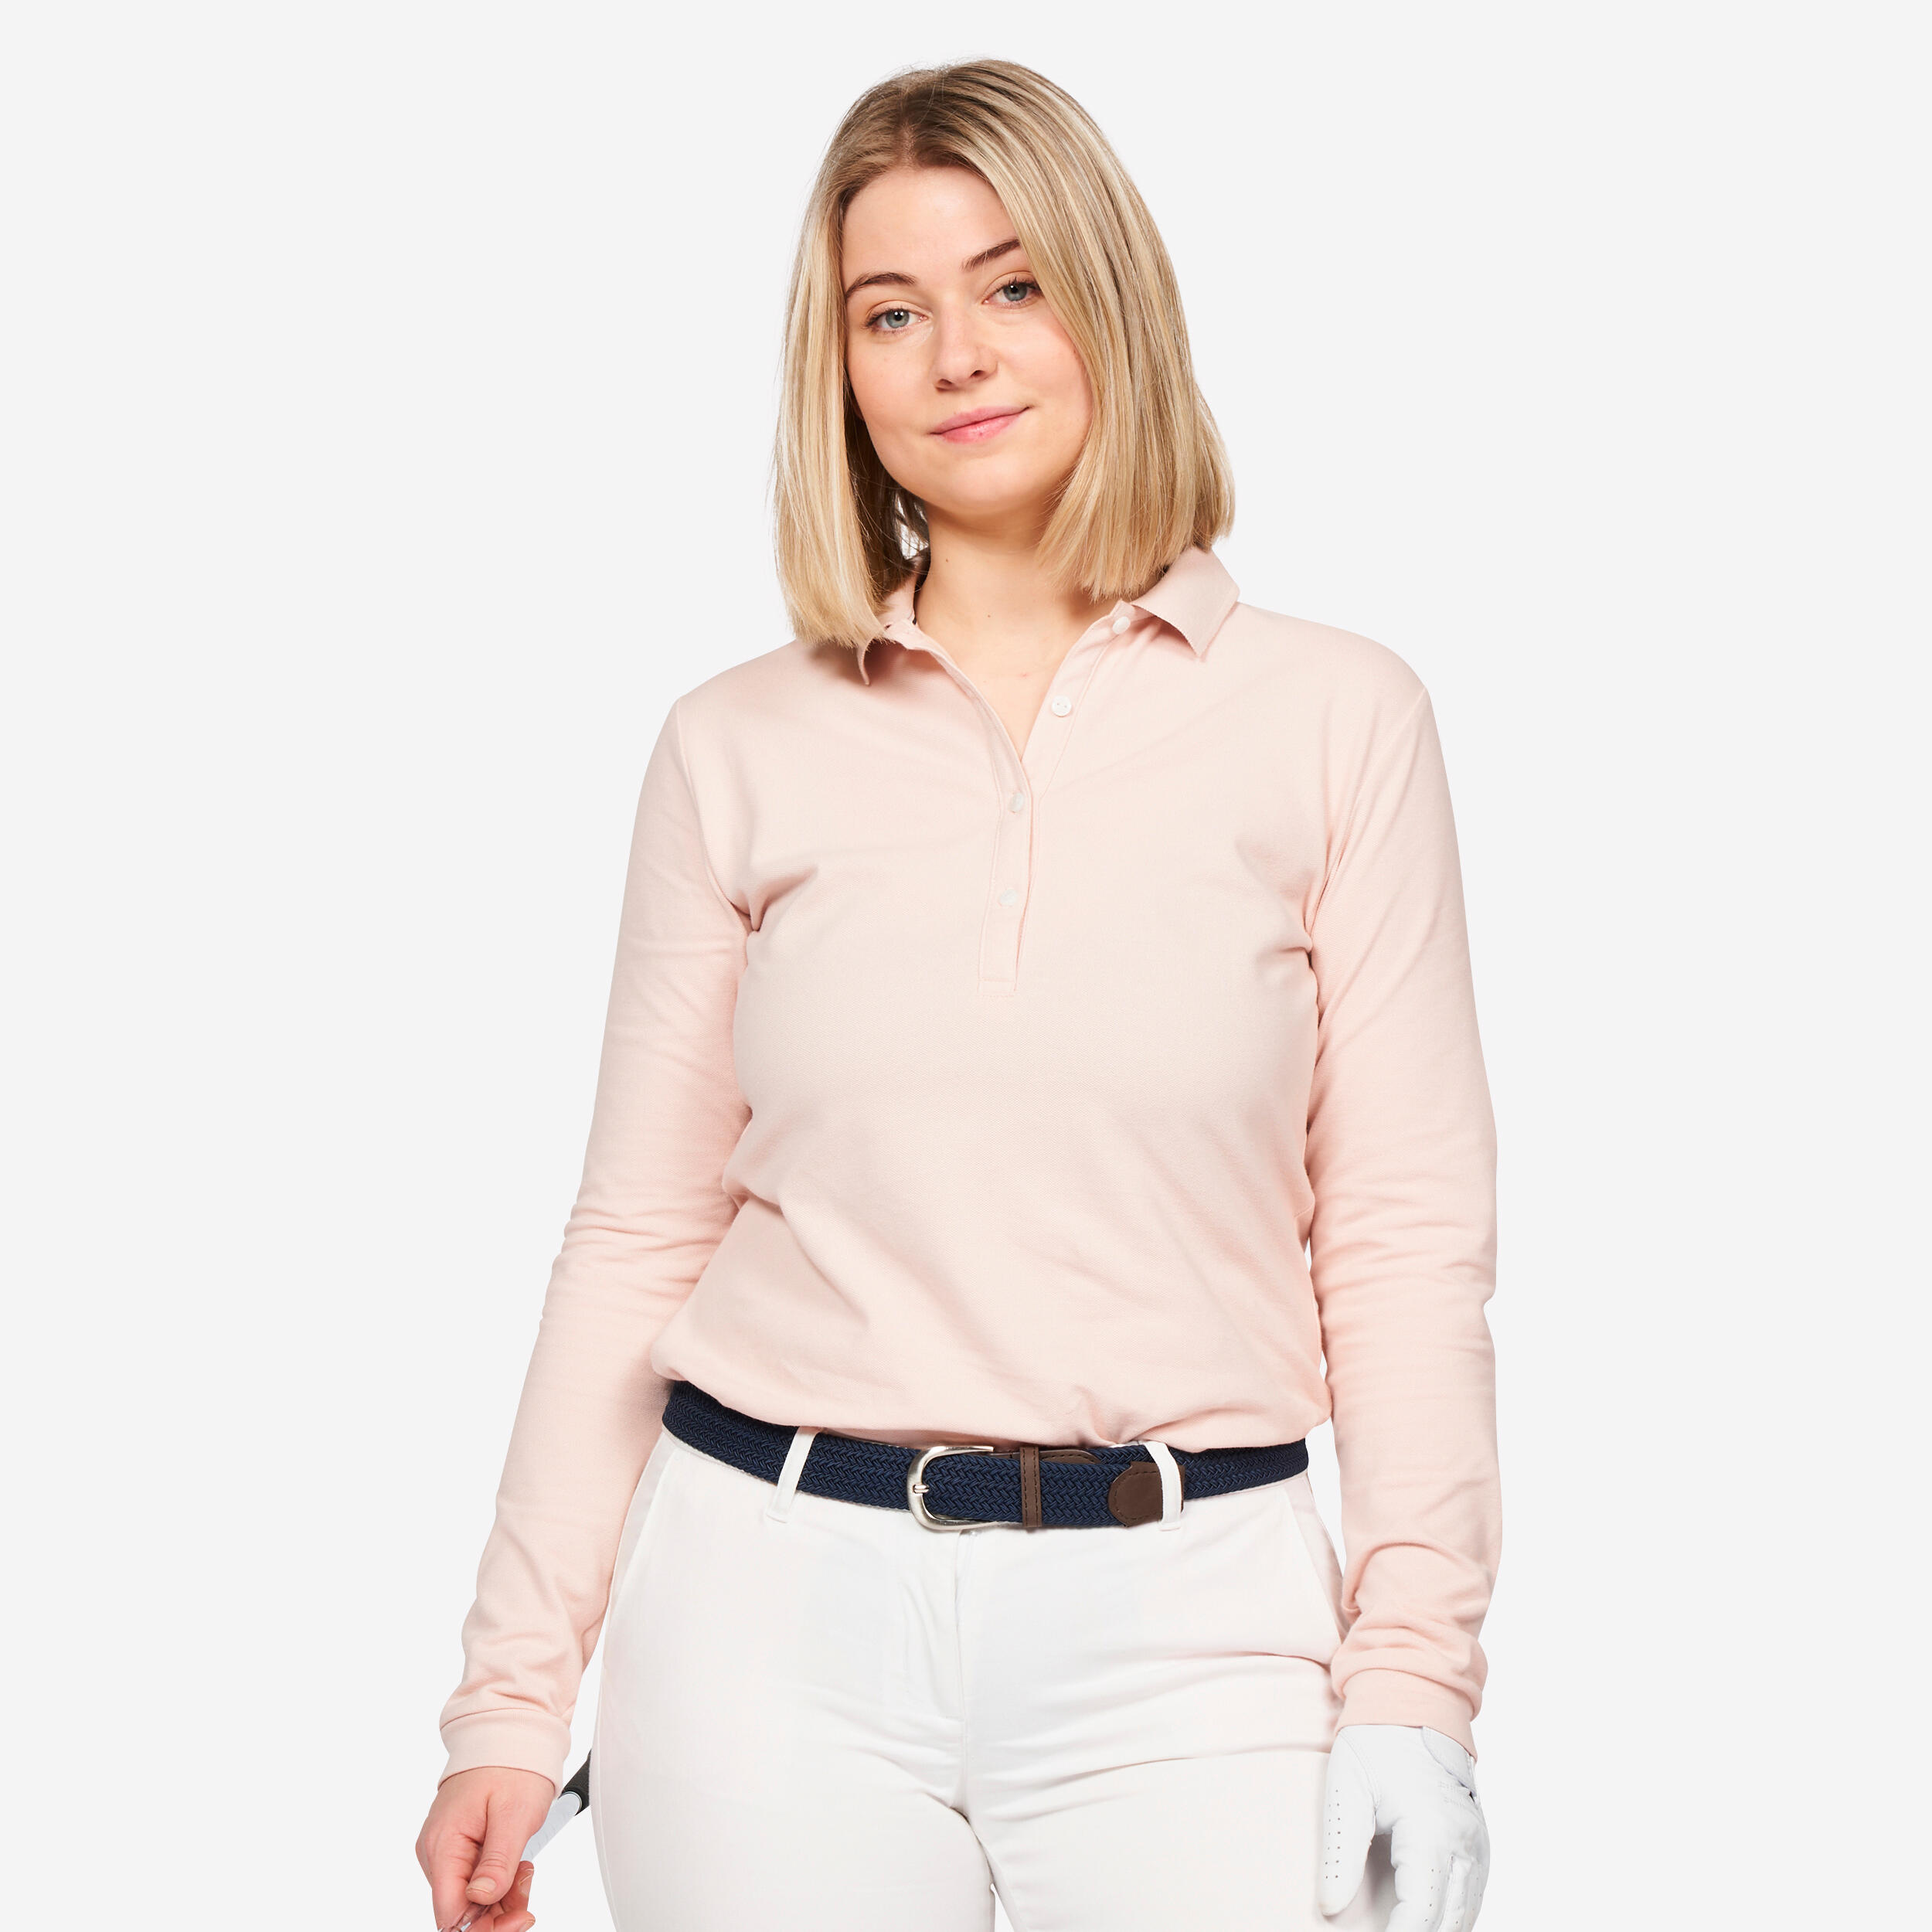 INESIS Women's golf polo long sleeved - MW500 pink